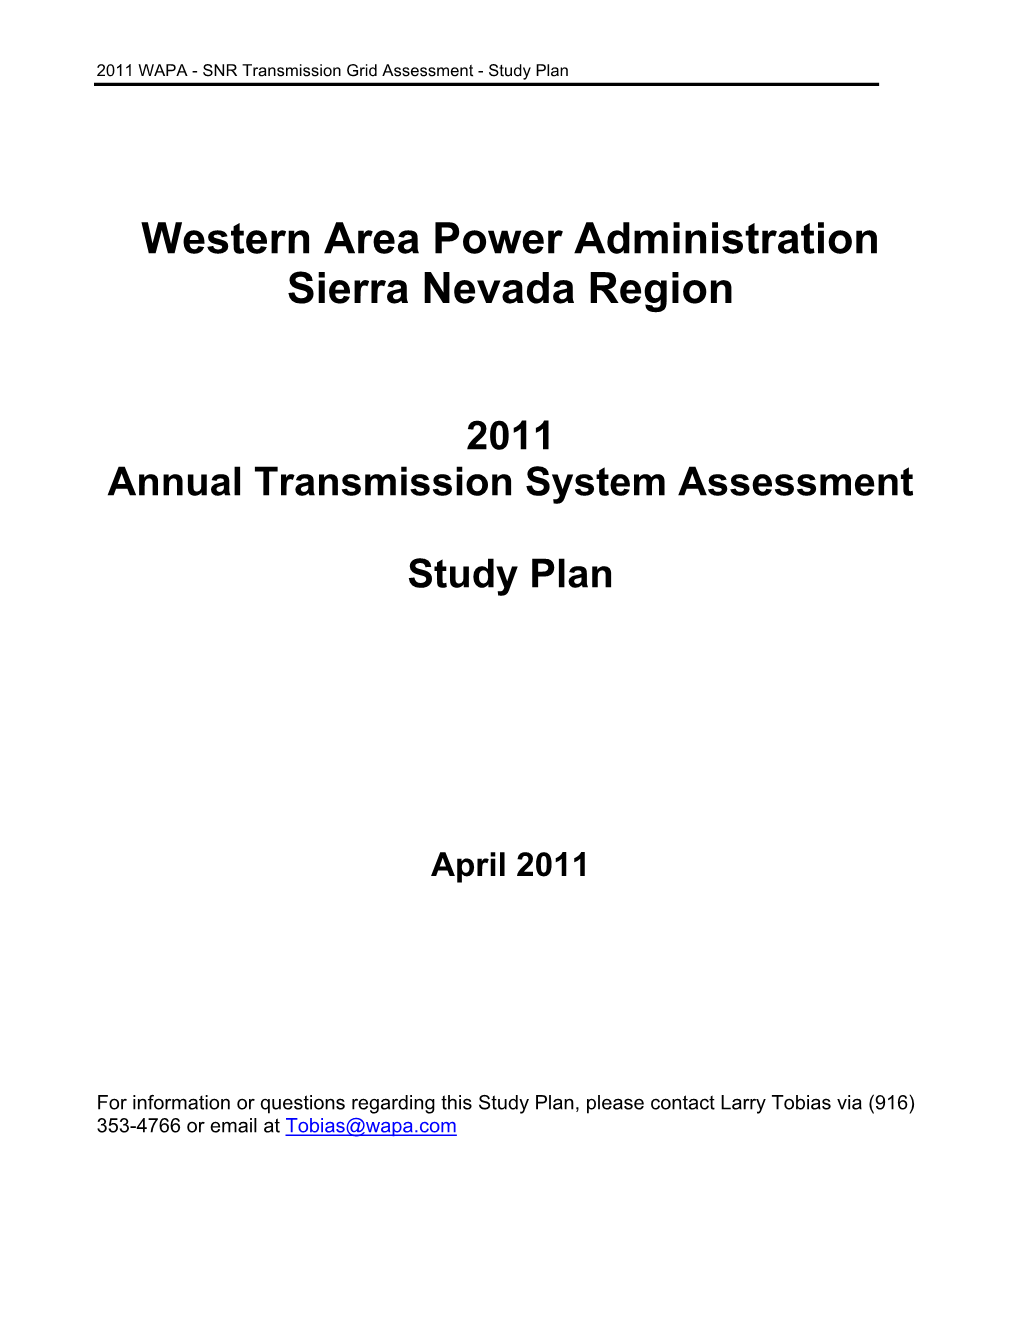 Western Area Power Administration Sierra Nevada Region